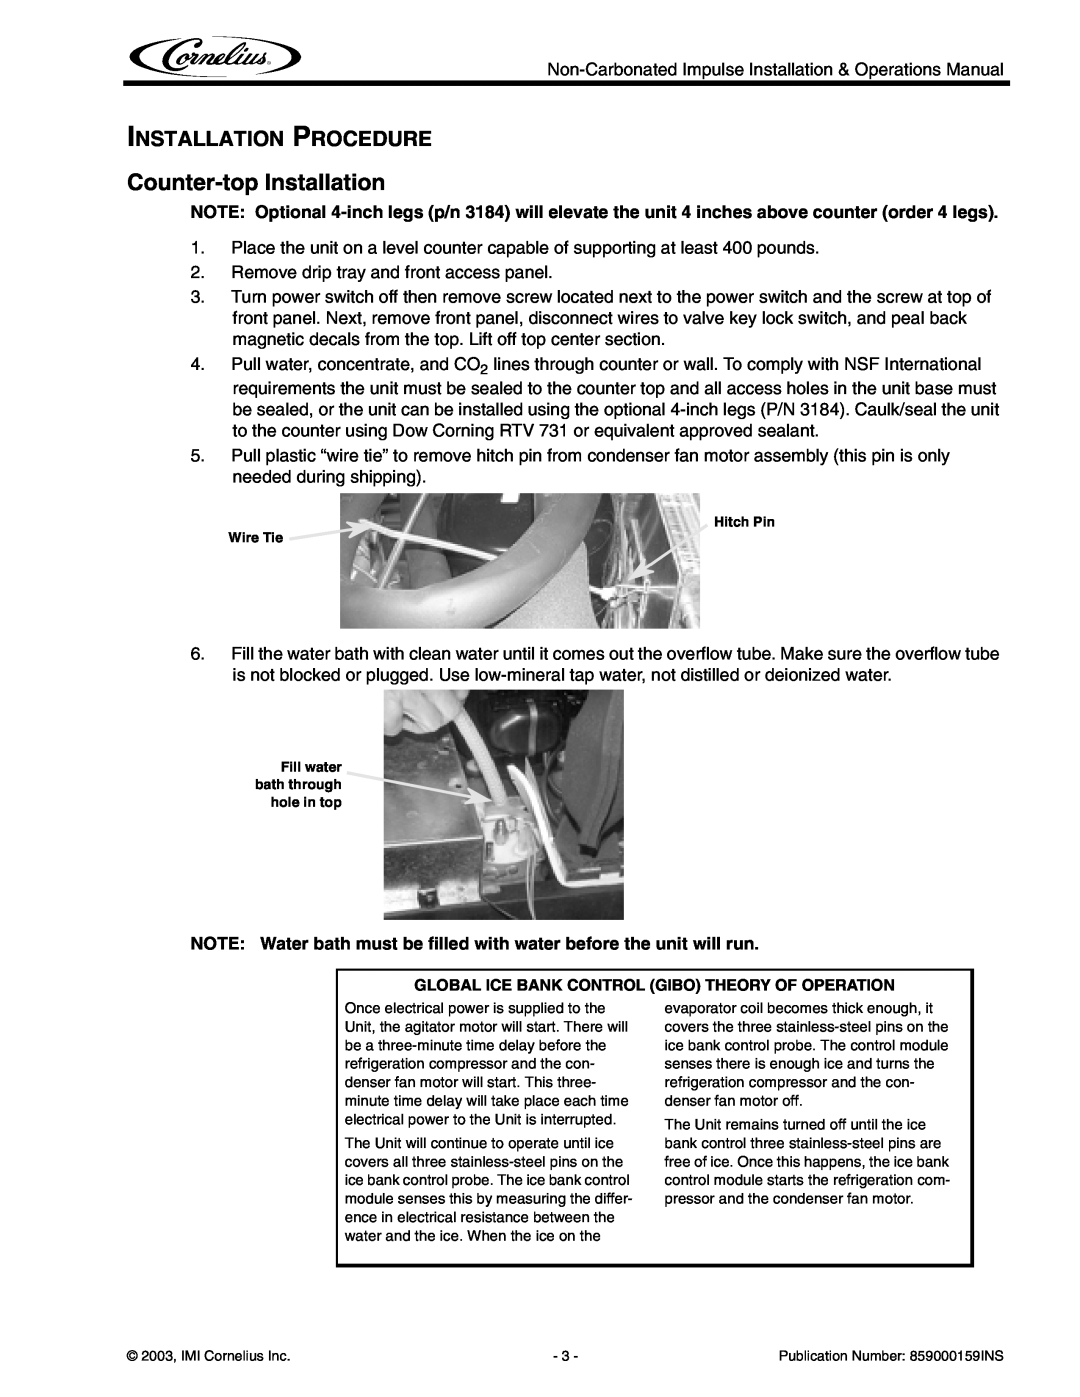 Cornelius Non-Carbonated Post-Mix Beverage Dispenser operation manual Counter-top Installation, Installation Procedure 